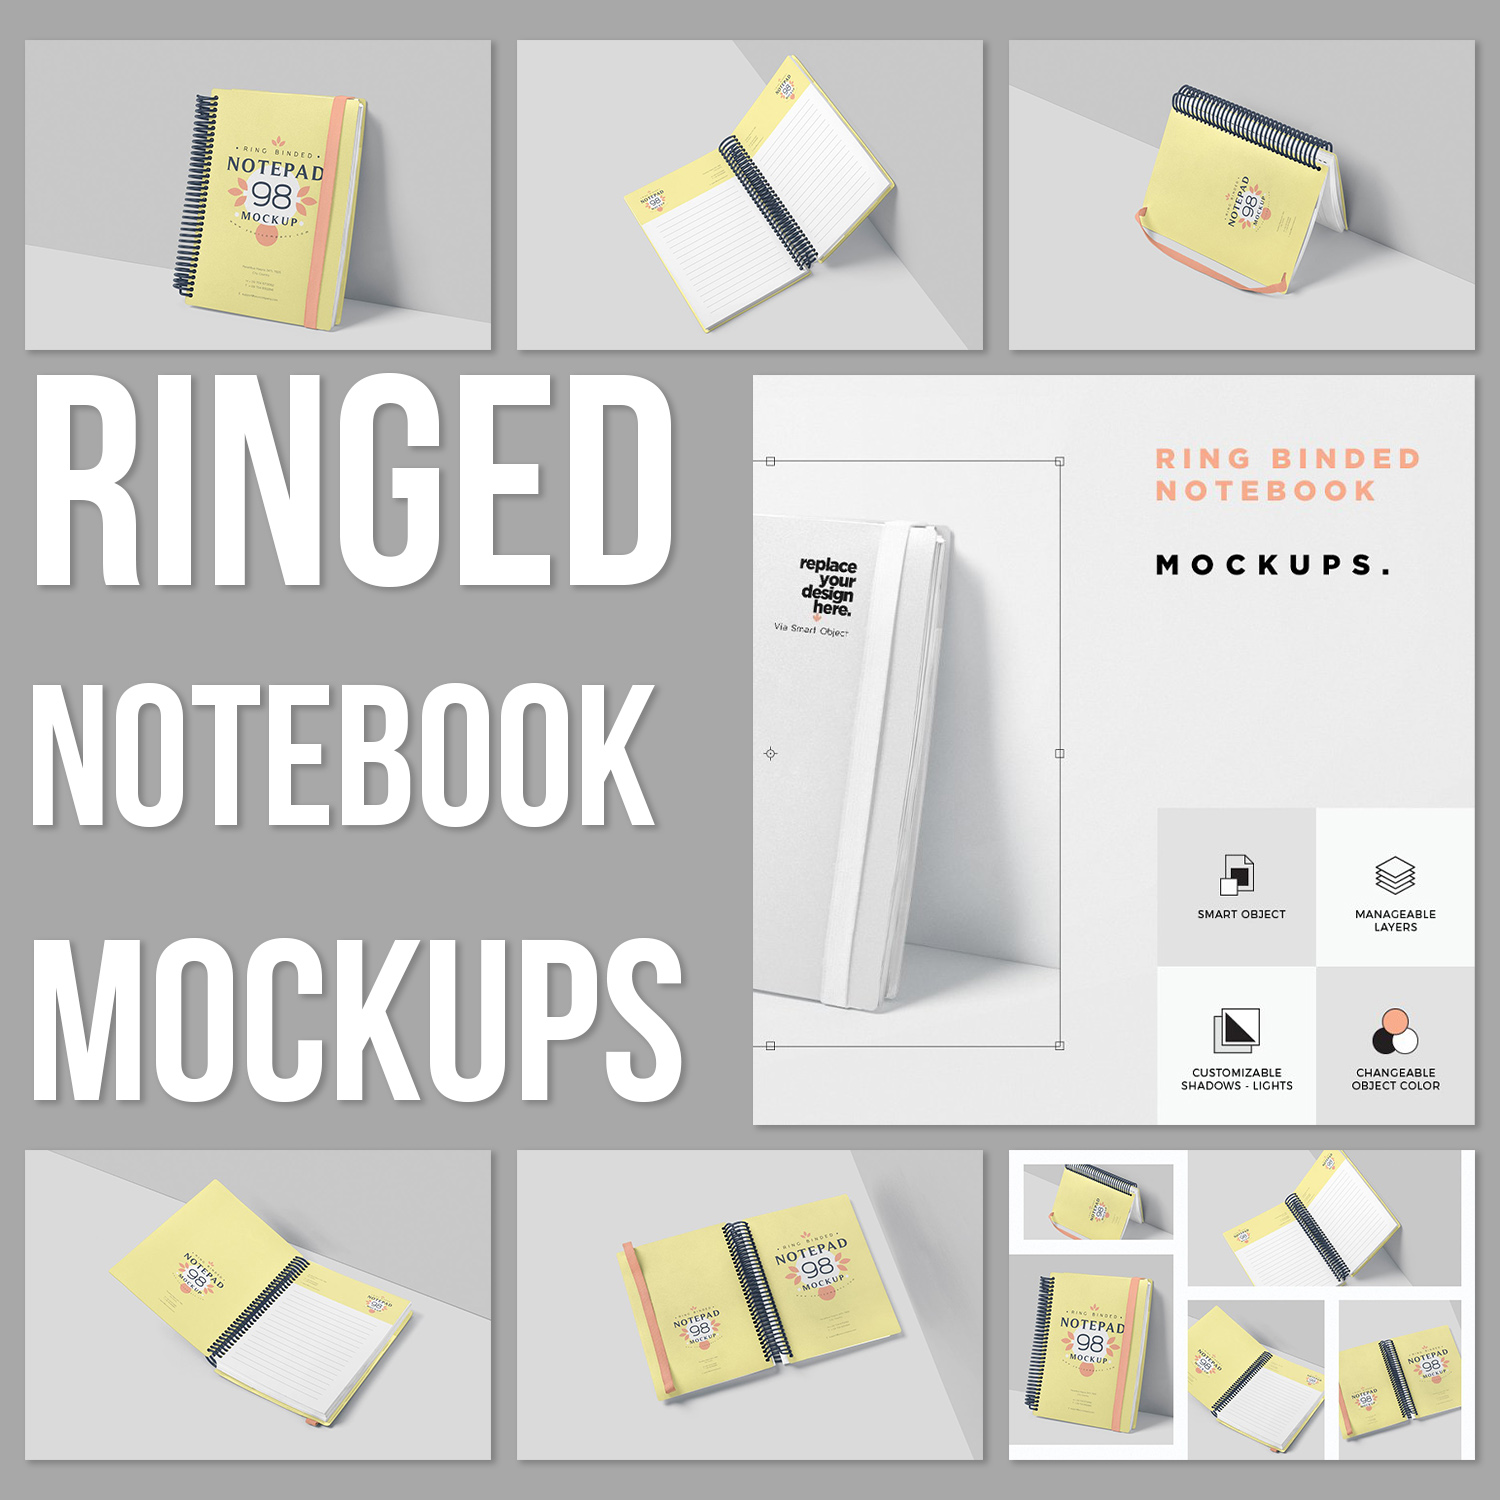 Ringed Notebook Mockups.